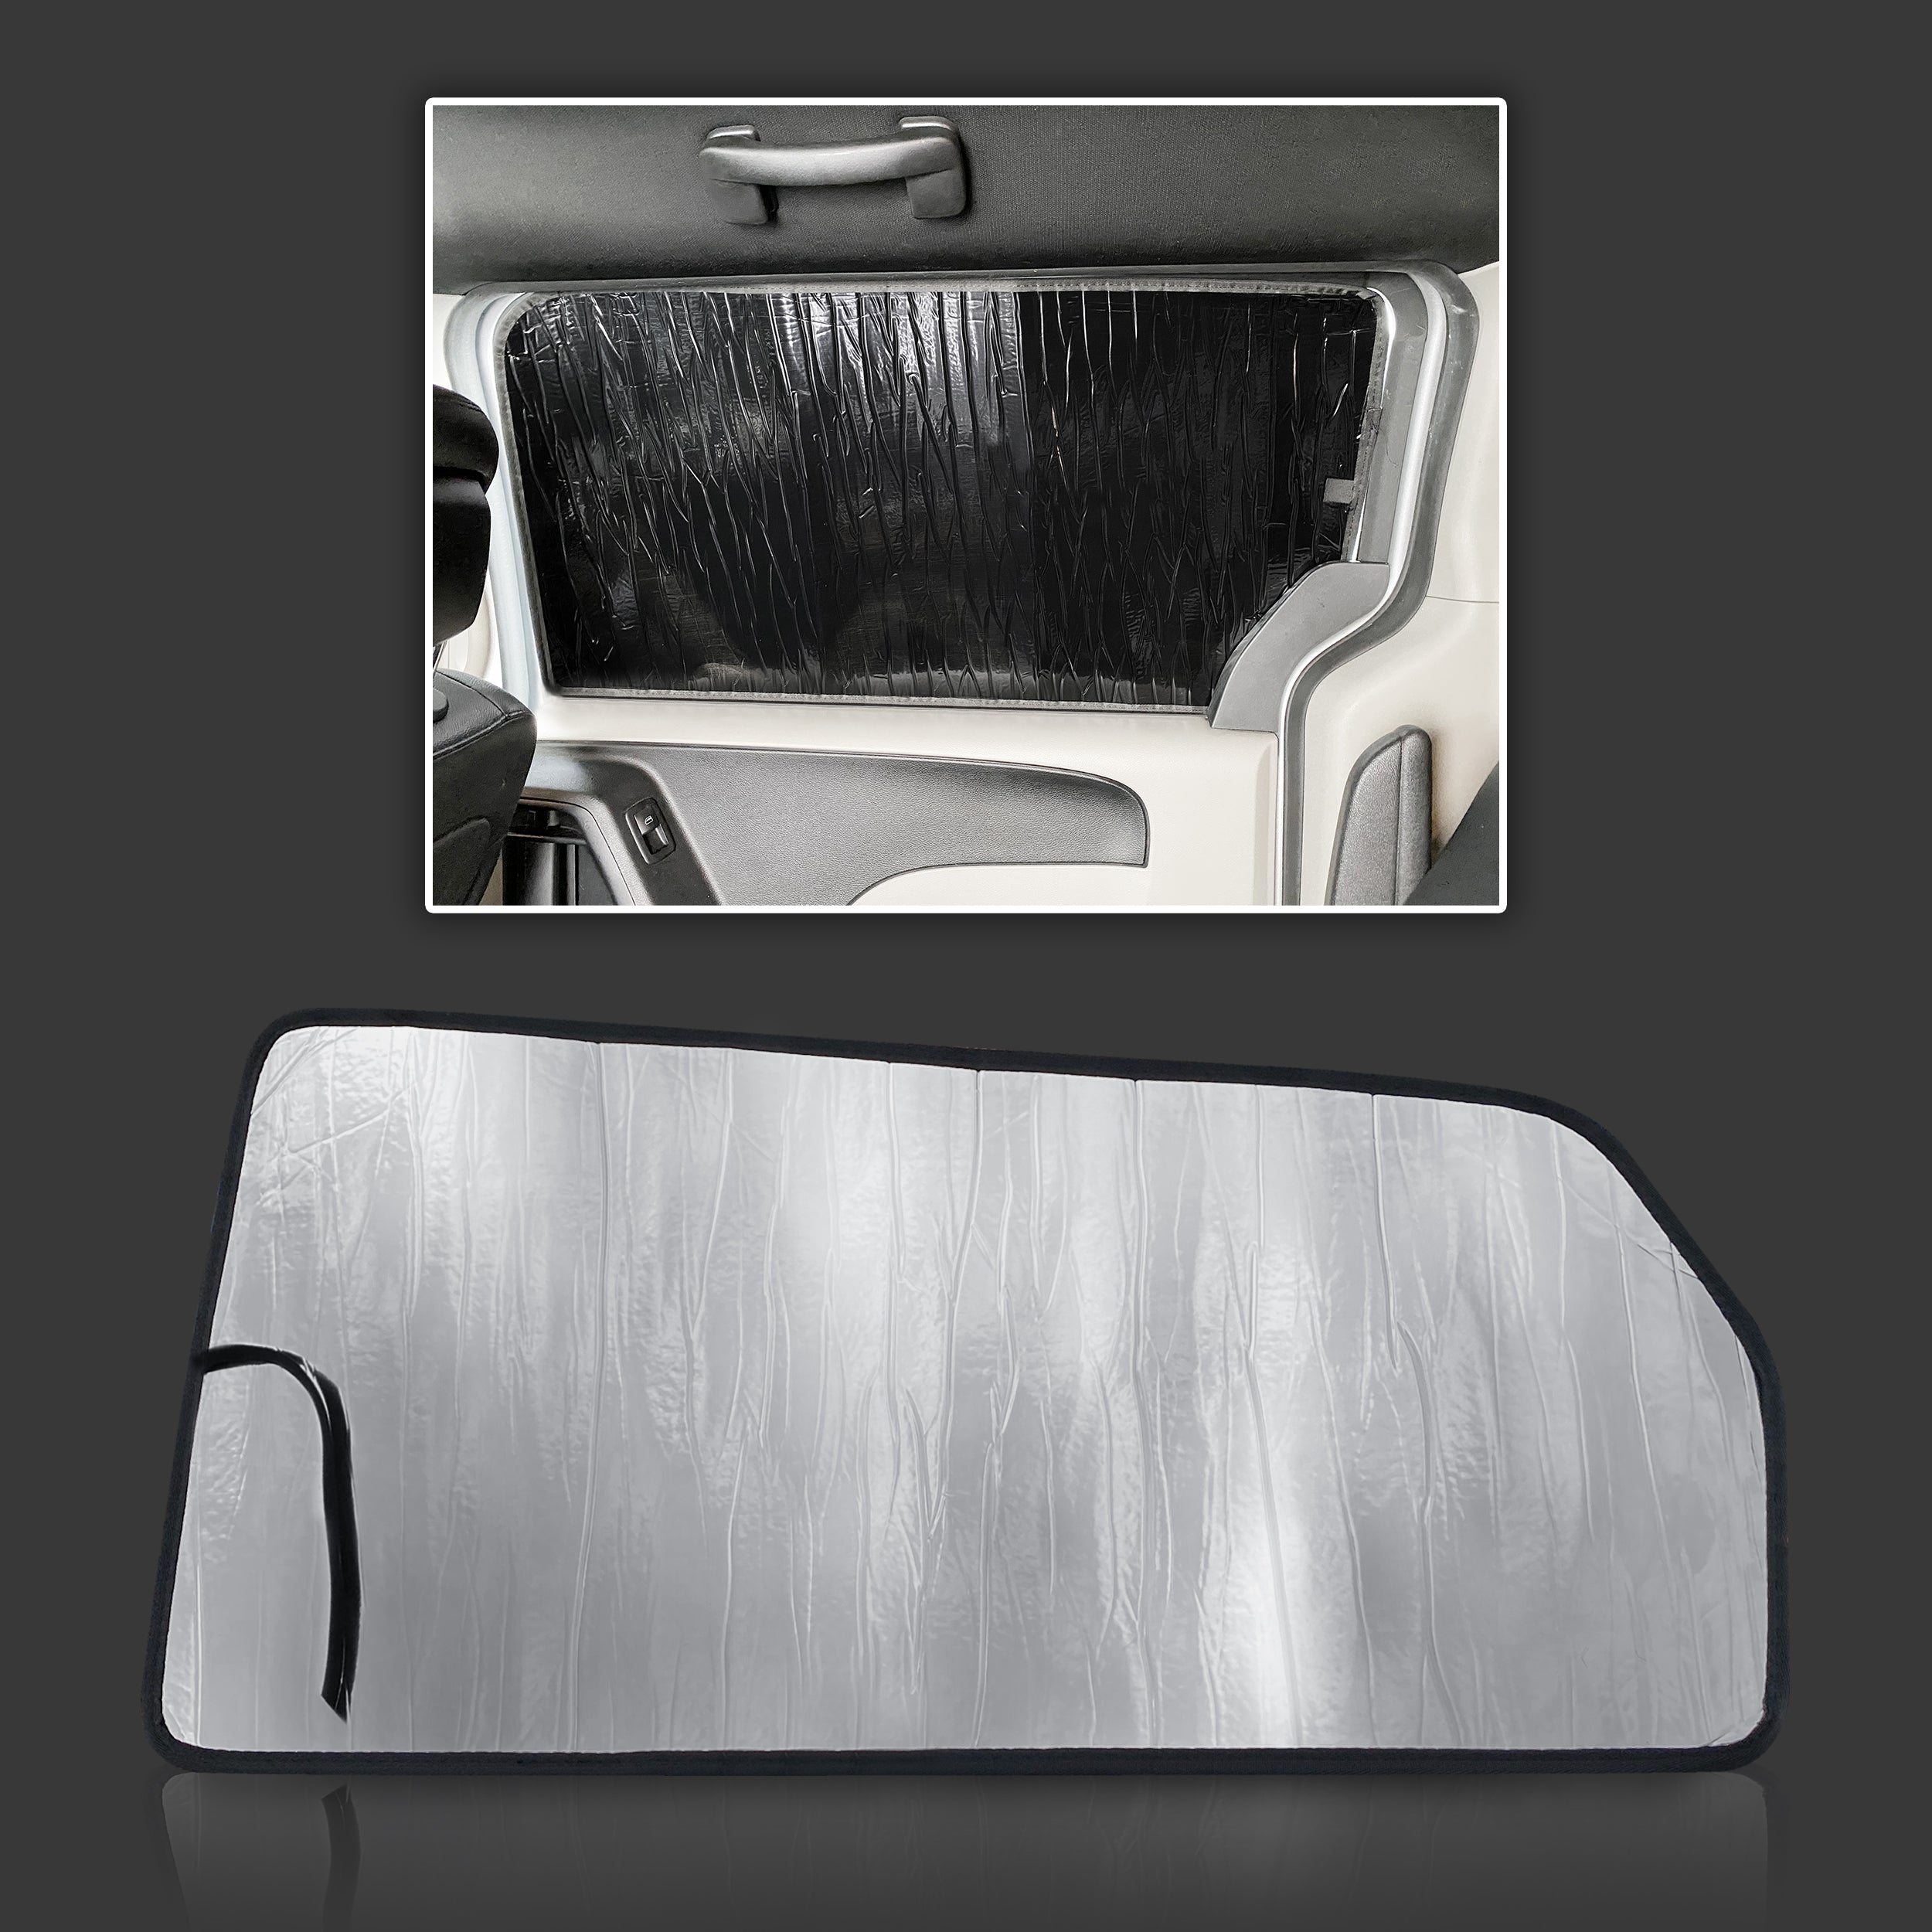 Sunshades for 2011-2020 Dodge Grand Caravan Minivan (View for more options)